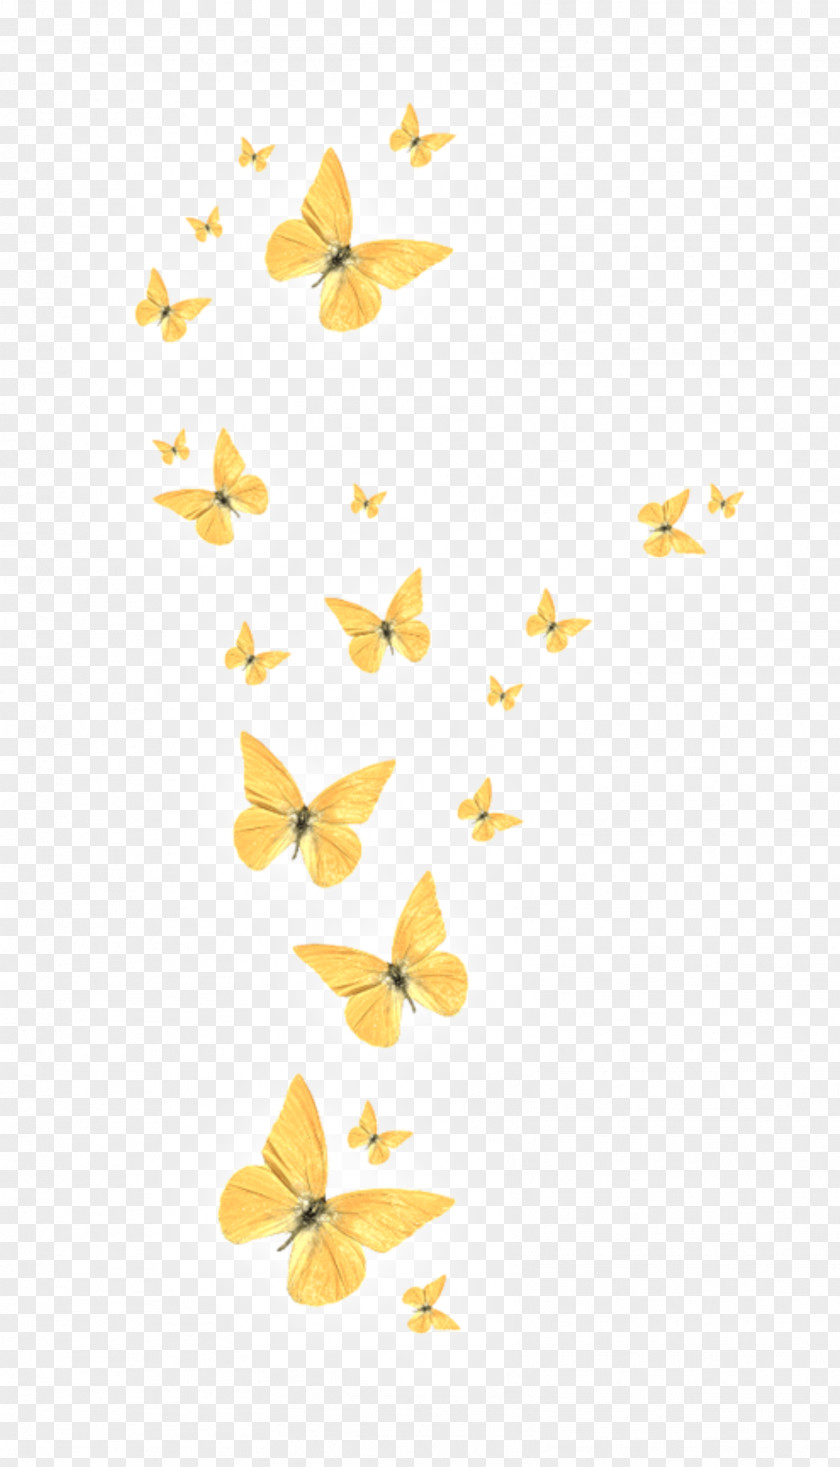 Butterfly Clip Art Image Desktop Wallpaper PNG